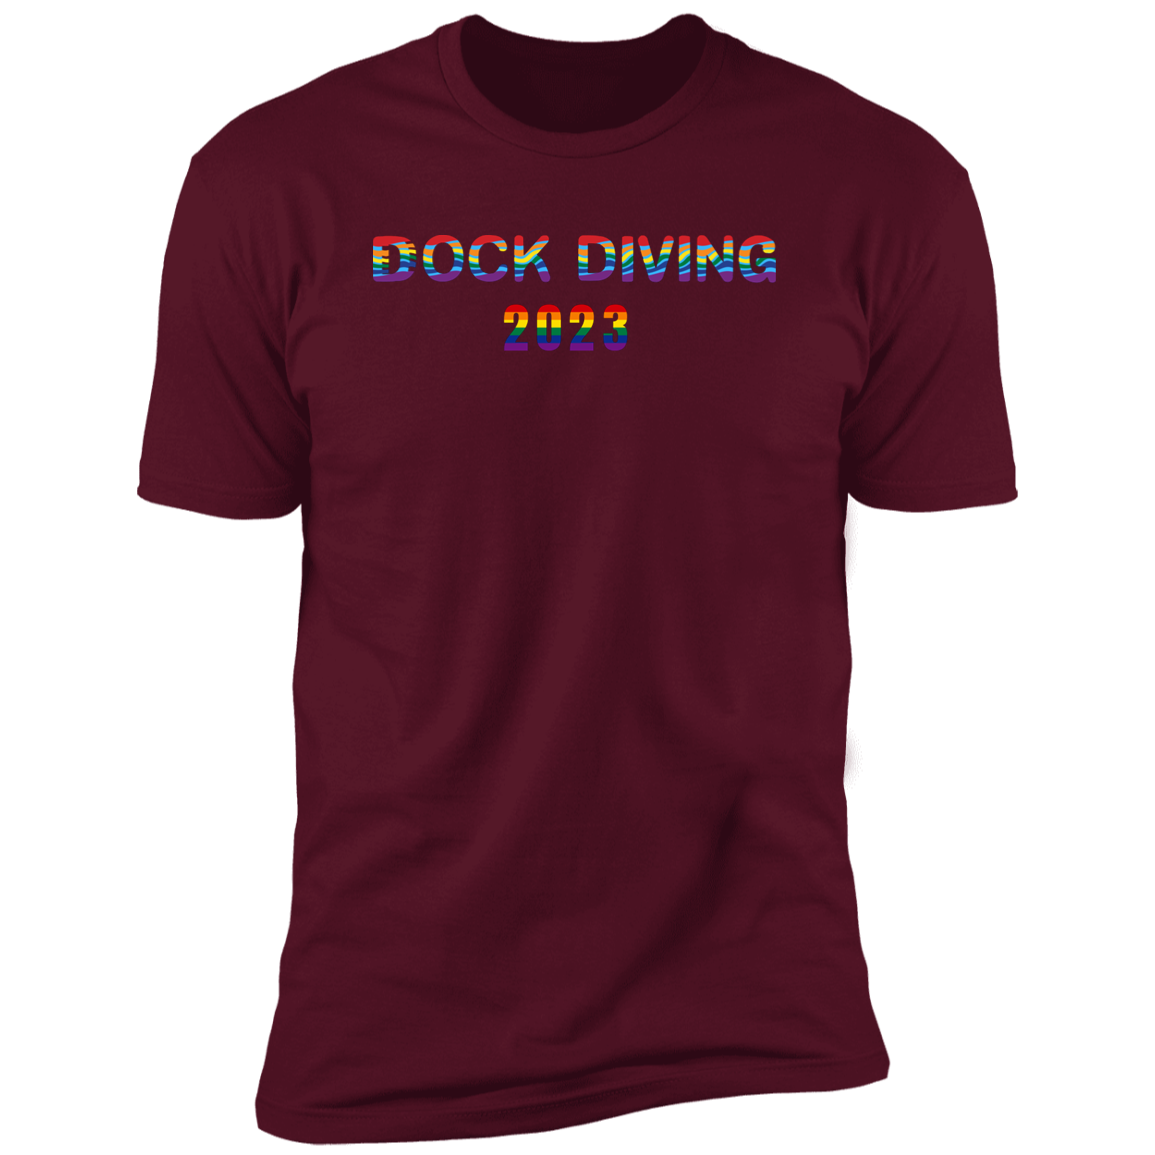 Dock Diving Pride 2023 Dock diving t-shirt, dog pride dock diving shirt for humans, in maroon